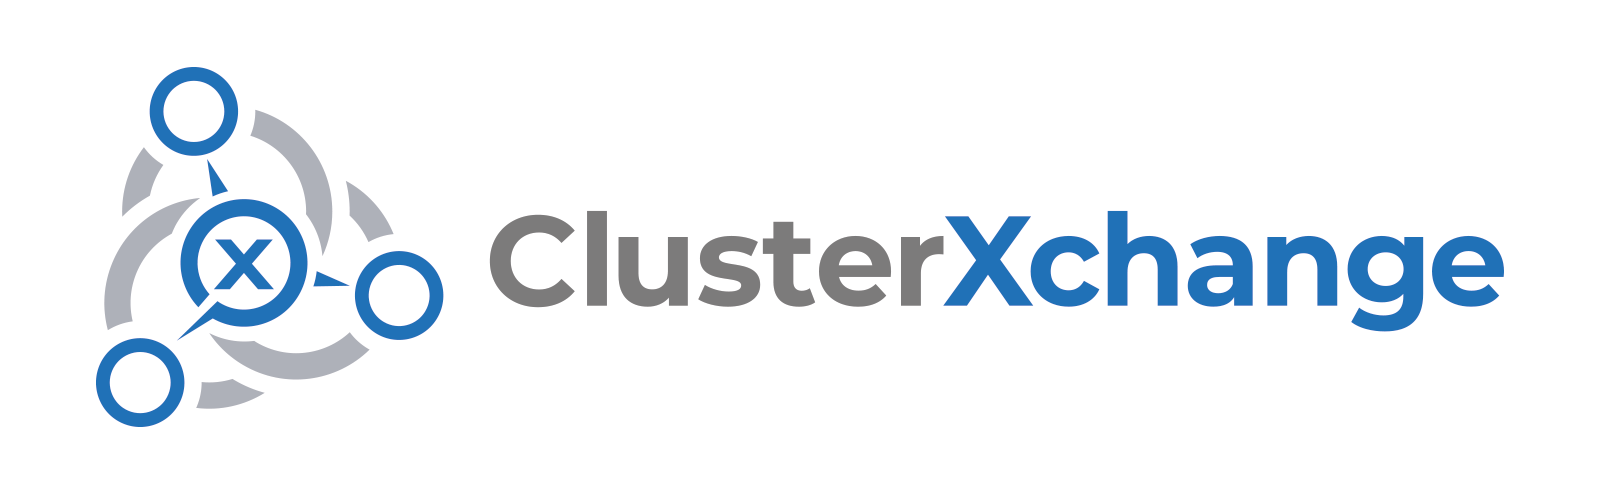 clusterexchange